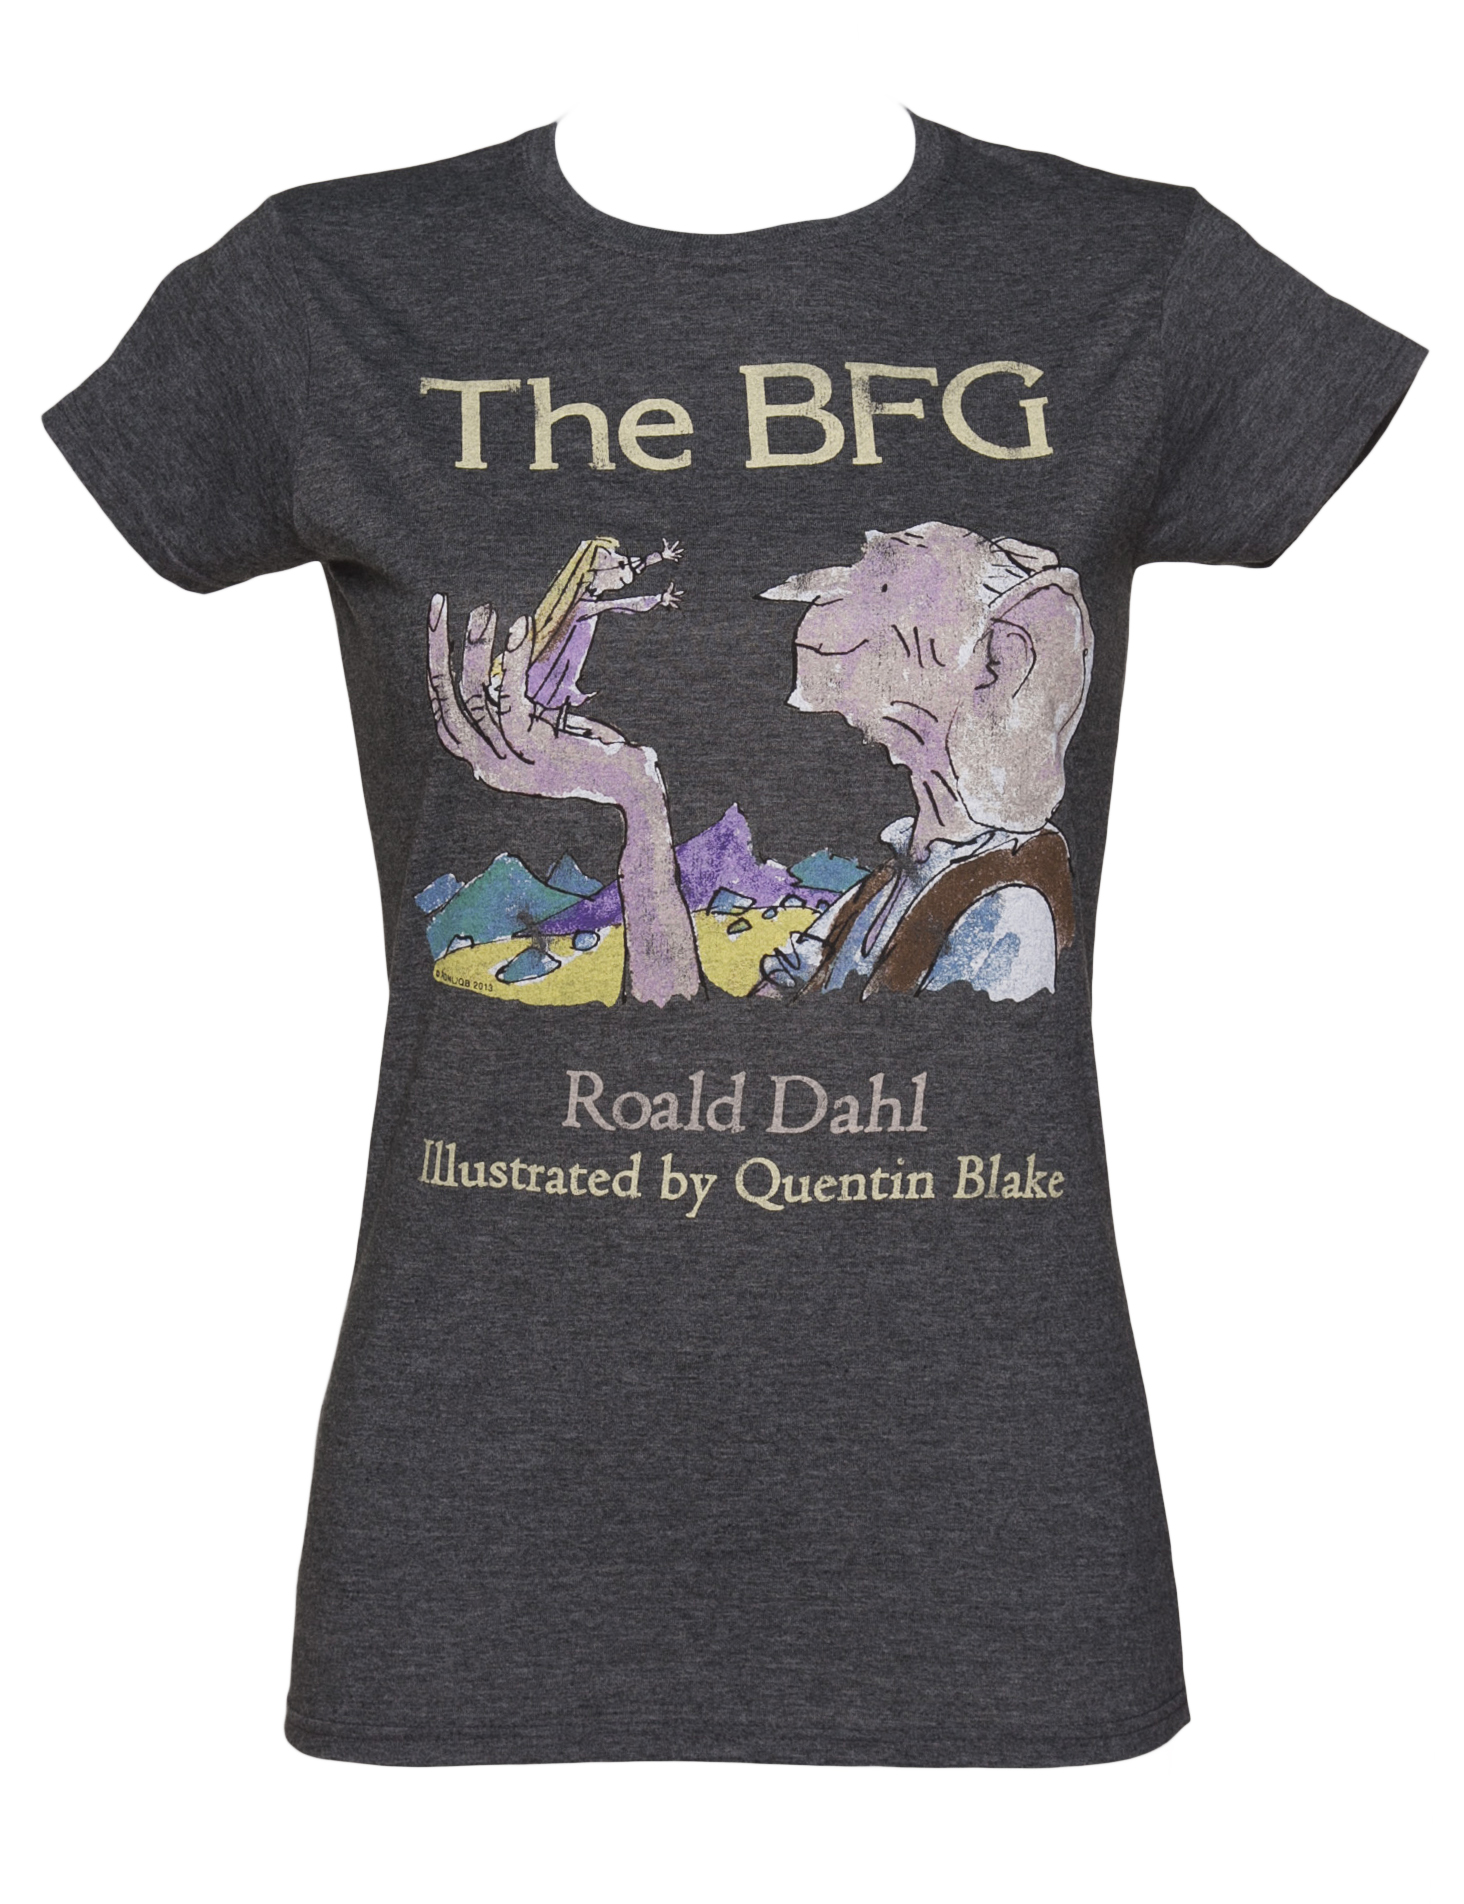 Ladies Roald Dahl The BFG T-Shirt